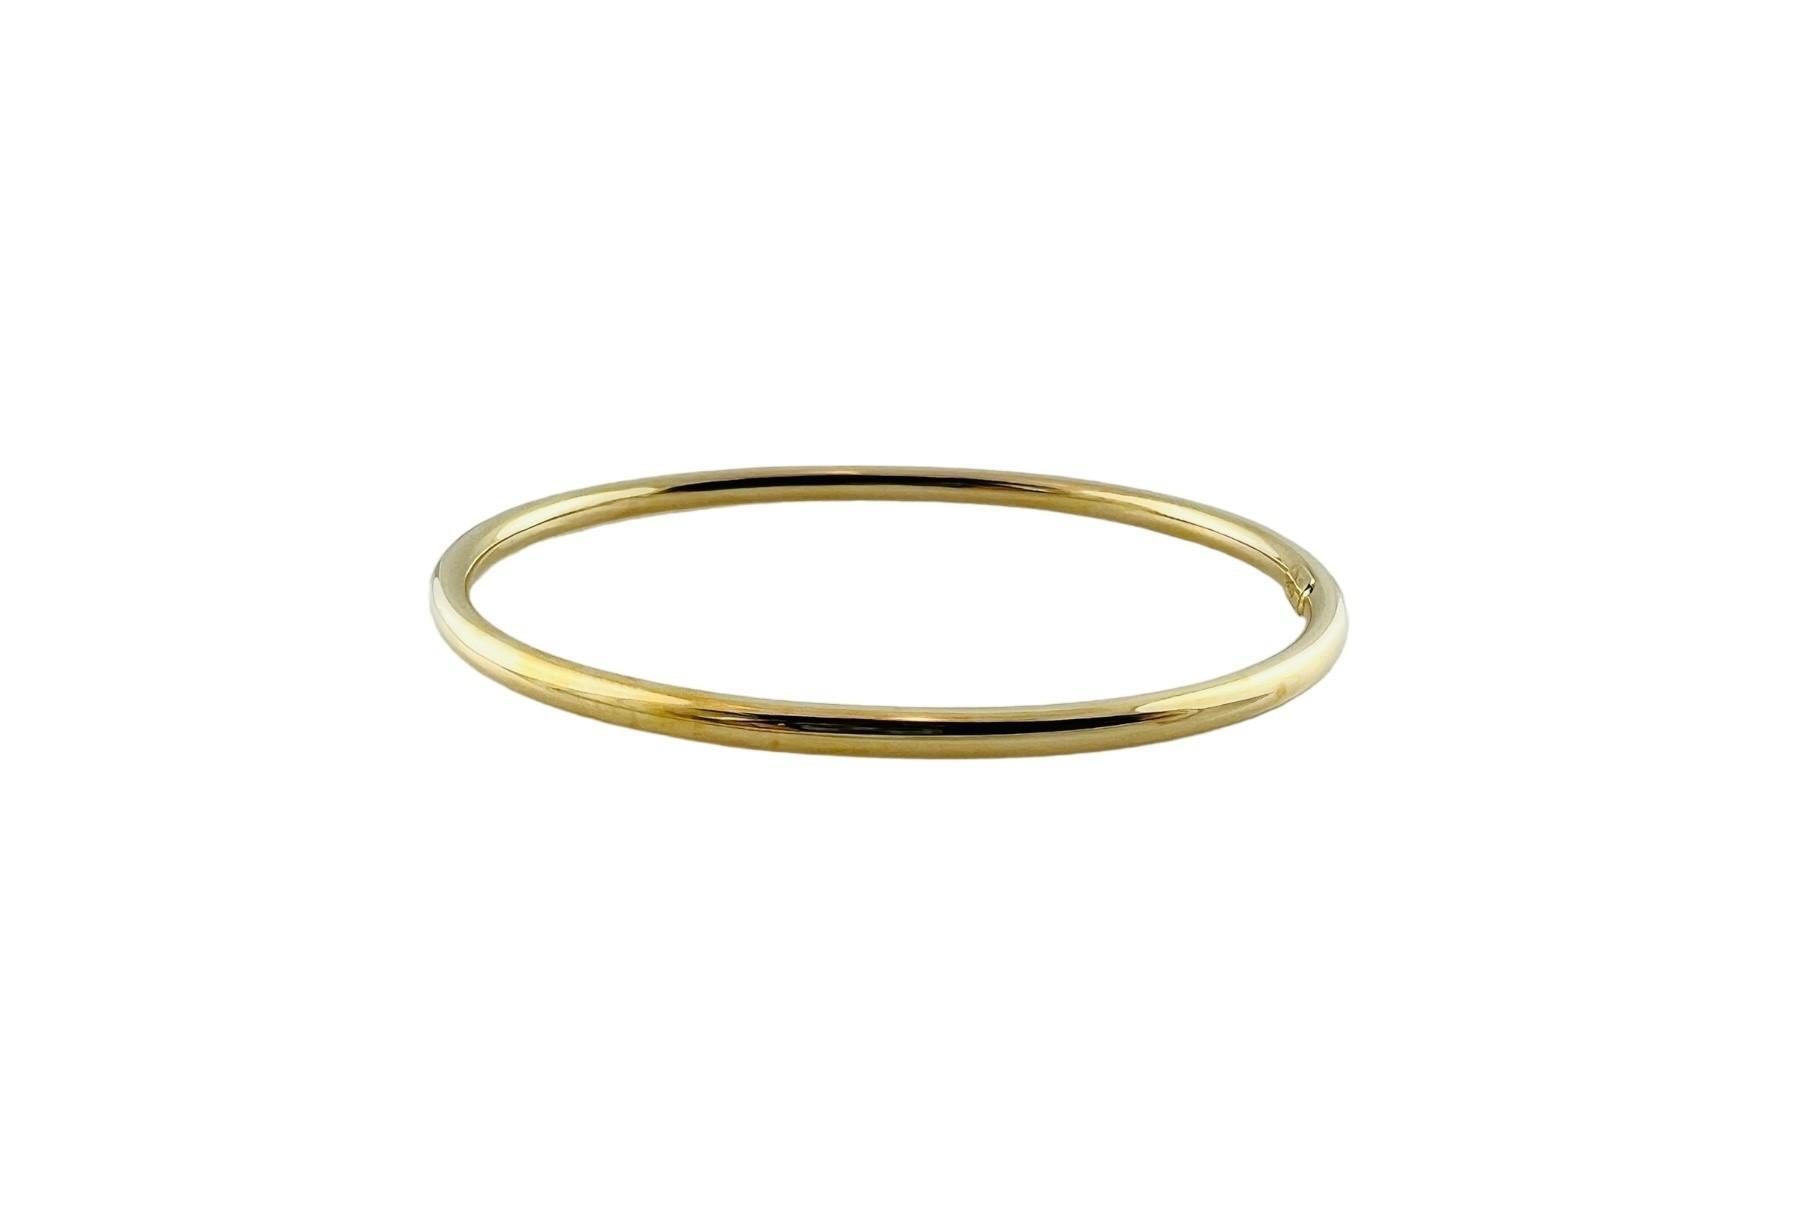 Tiffany & Co. 18K Yellow Gold Oval Bangle Bracelet #16680 5